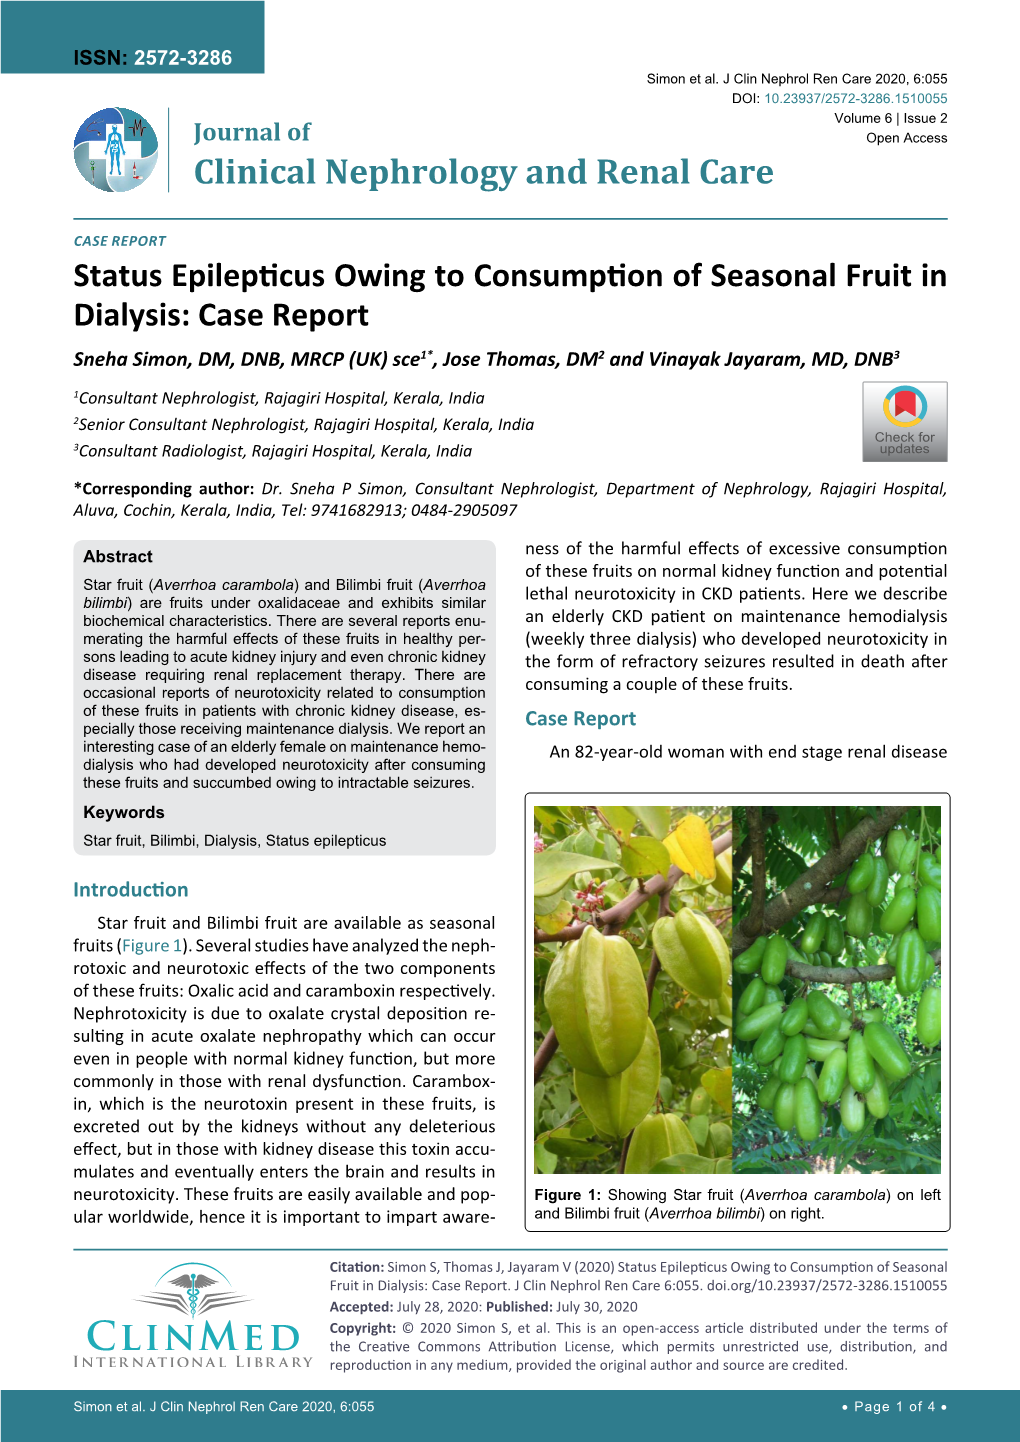 Status Epilepticus Owing to Consumption of Seasonal Fruit In